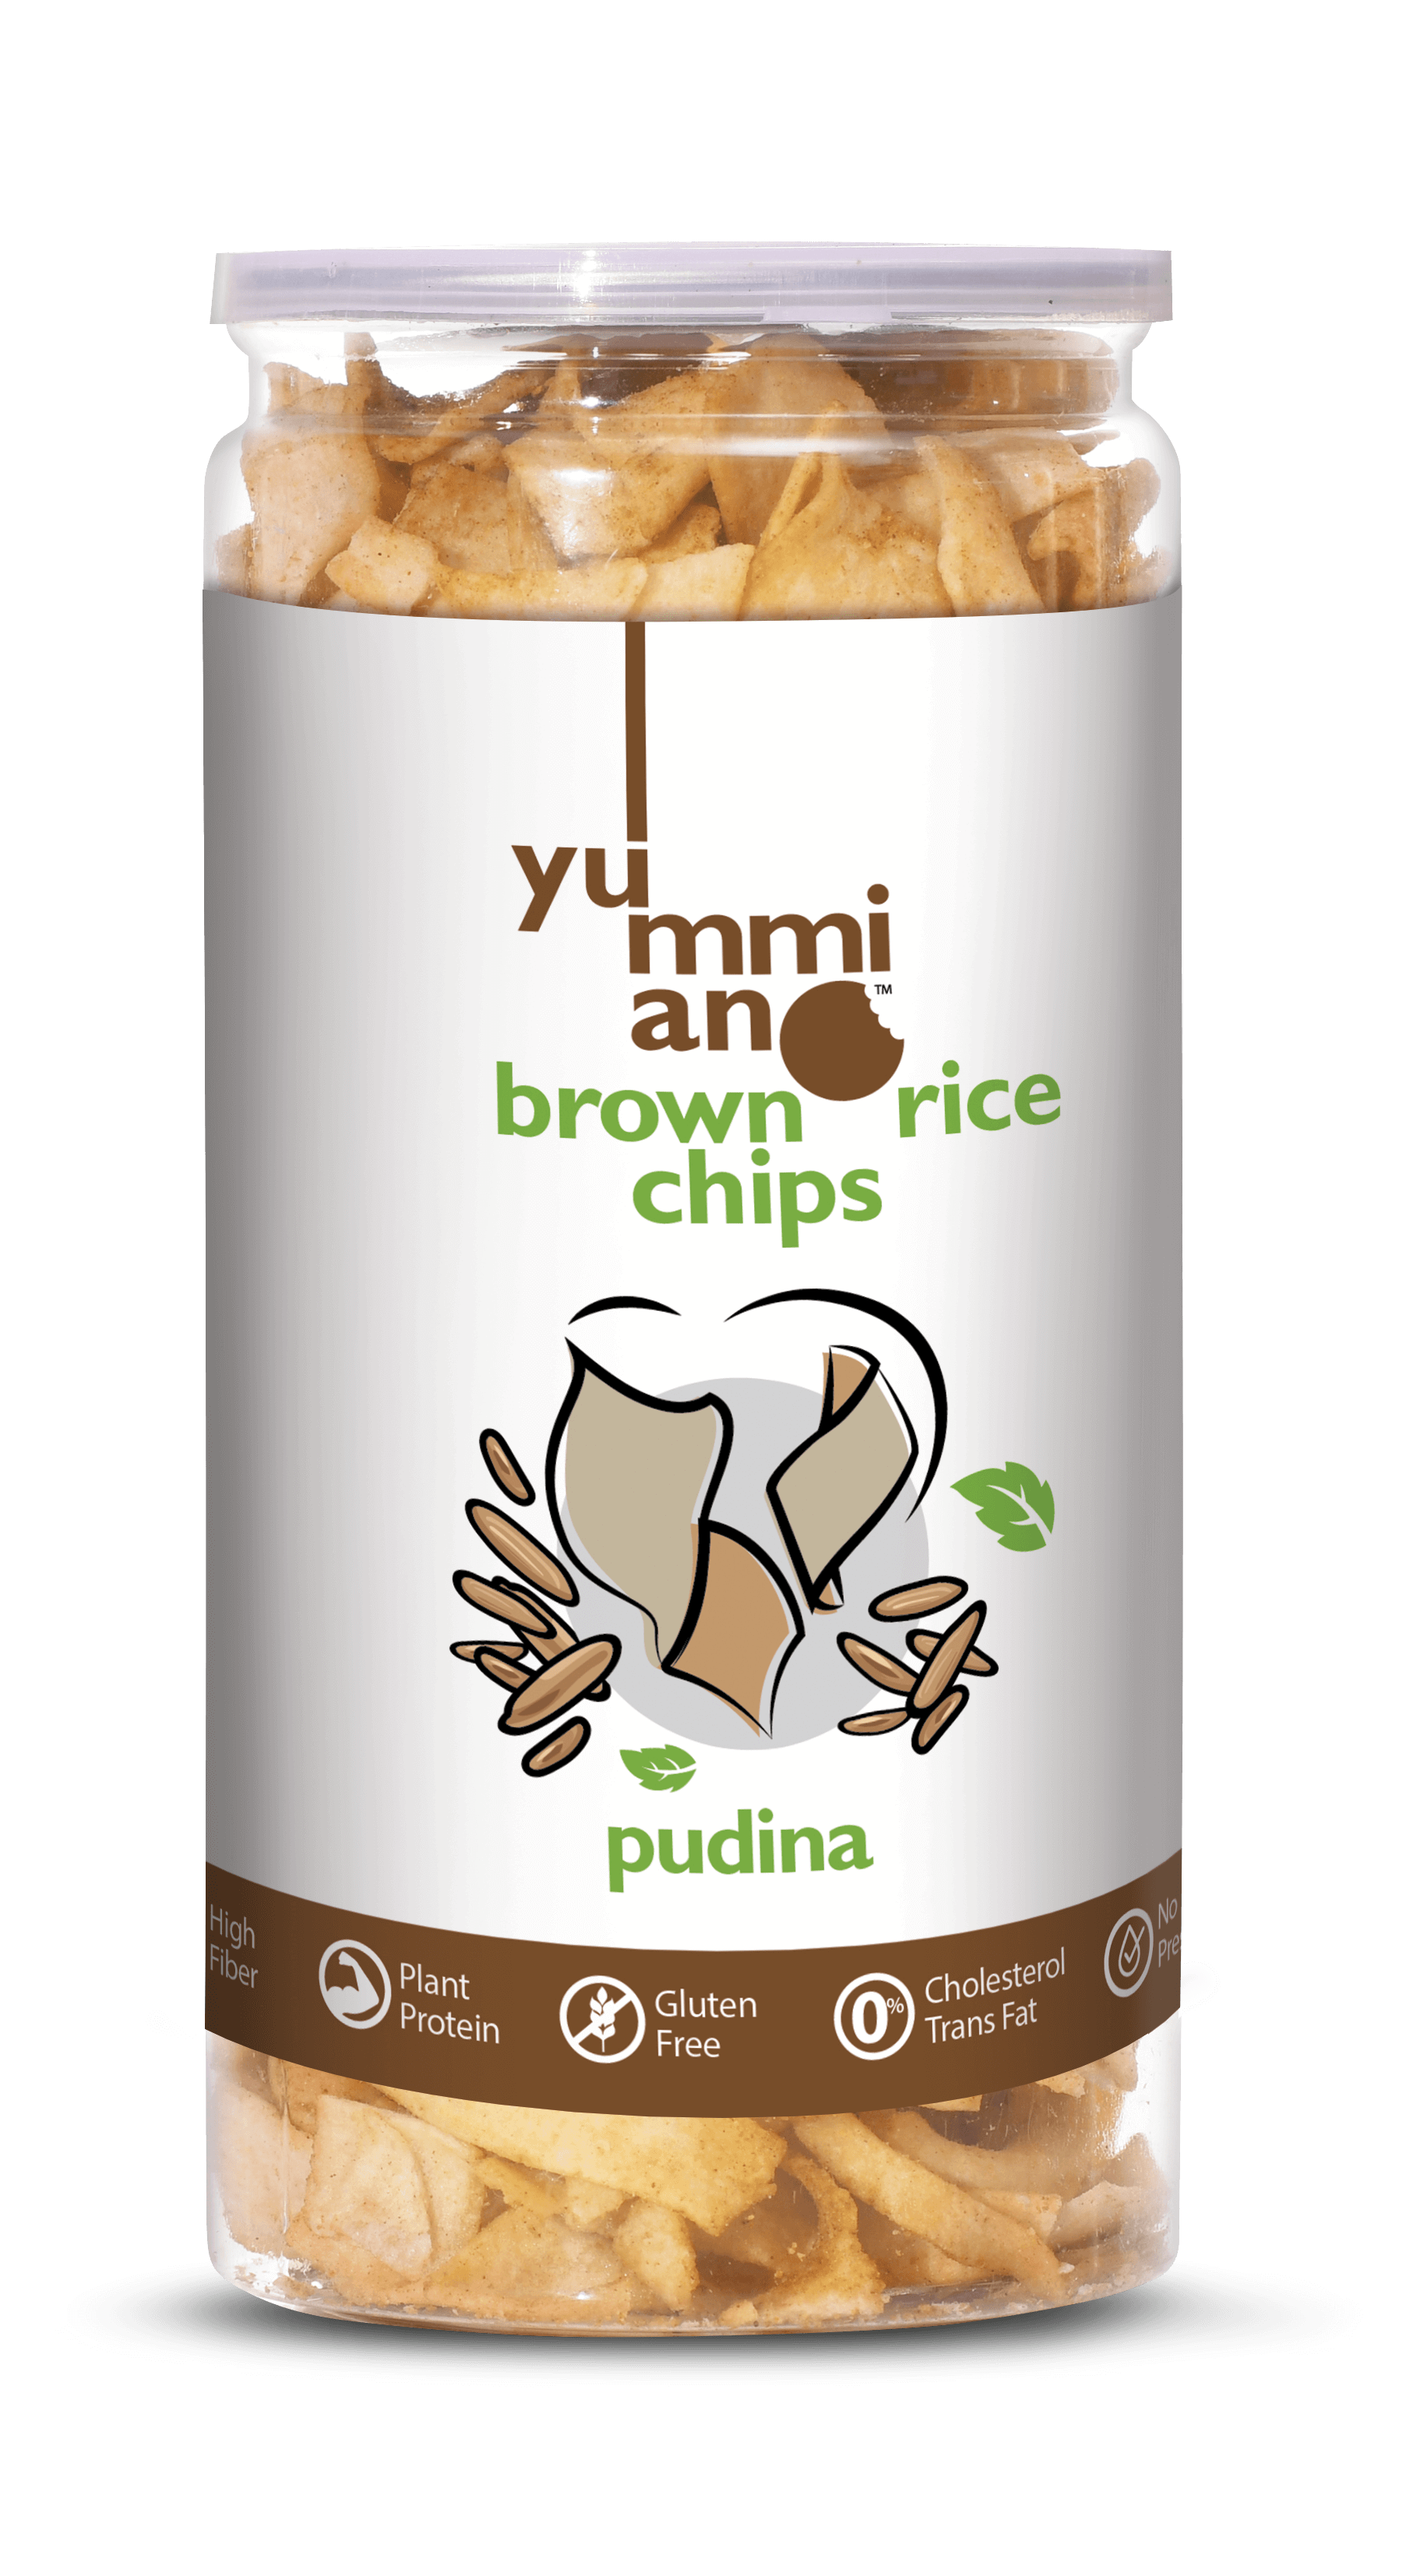 Yummiano Brown Rice Chips – Pudina Image